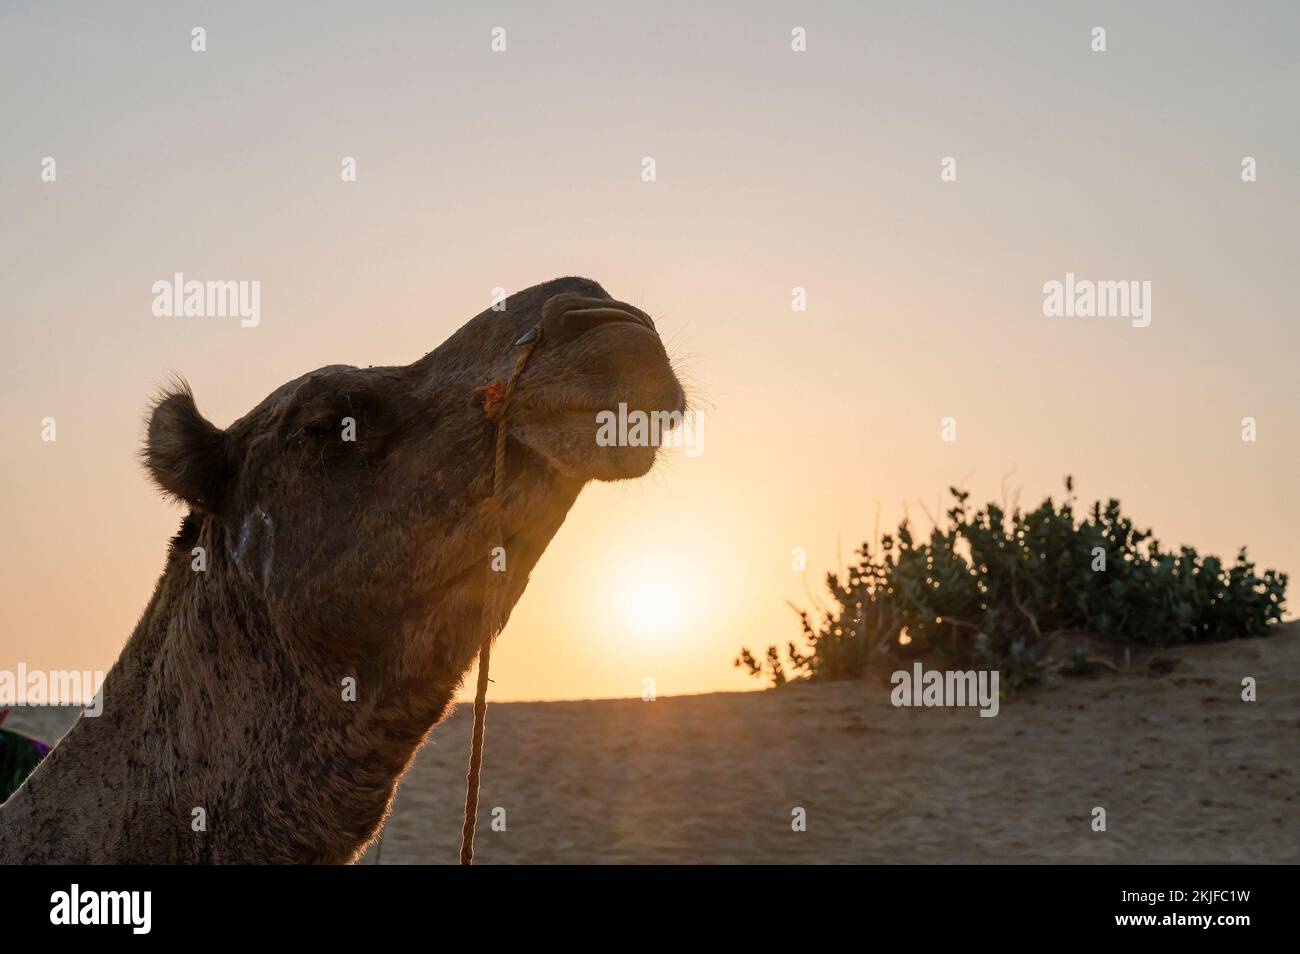 Sun rising at the horizon of Thar desert, Rajasthan, India. Dromedary, dromedary camel, Arabian camel, or one-humped camel is resting on sand dune. Stock Photo